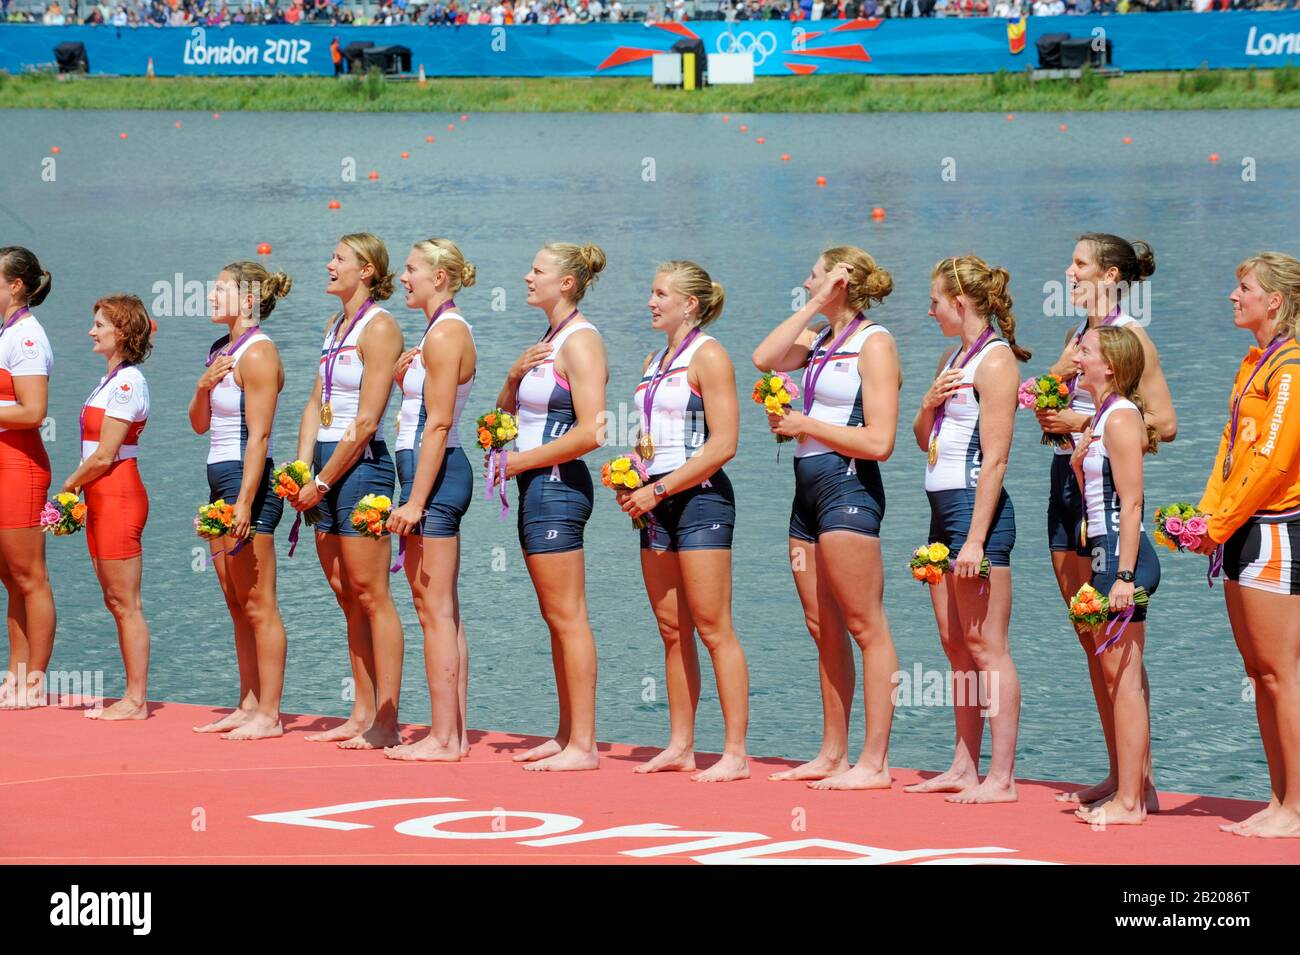 Eton Dorney, Windsor, Großbritannien, 2012 London Olympic Regatta, Dorney Lake. Eton Rowing Center, Berkshire. Dorney Lake. Damen Eights, Beschreibung; USA W8+ Goldmedaillengewinnerin. Erin CAFARO (b) , Zsuzsanna FRANCIA (2) , Esther LOFGREN (3) , Taylor RITZEL (4) , Meghan MUSNICKI (5) , Eleanor LOGAN (6) , Caroline LIND (7) , Caryn DAVIES (s), Mary WHIPPLE (c) 13:12:02/01 Donnerstag/08 [Credit], Mary WHIPPLE (c) Stockfoto